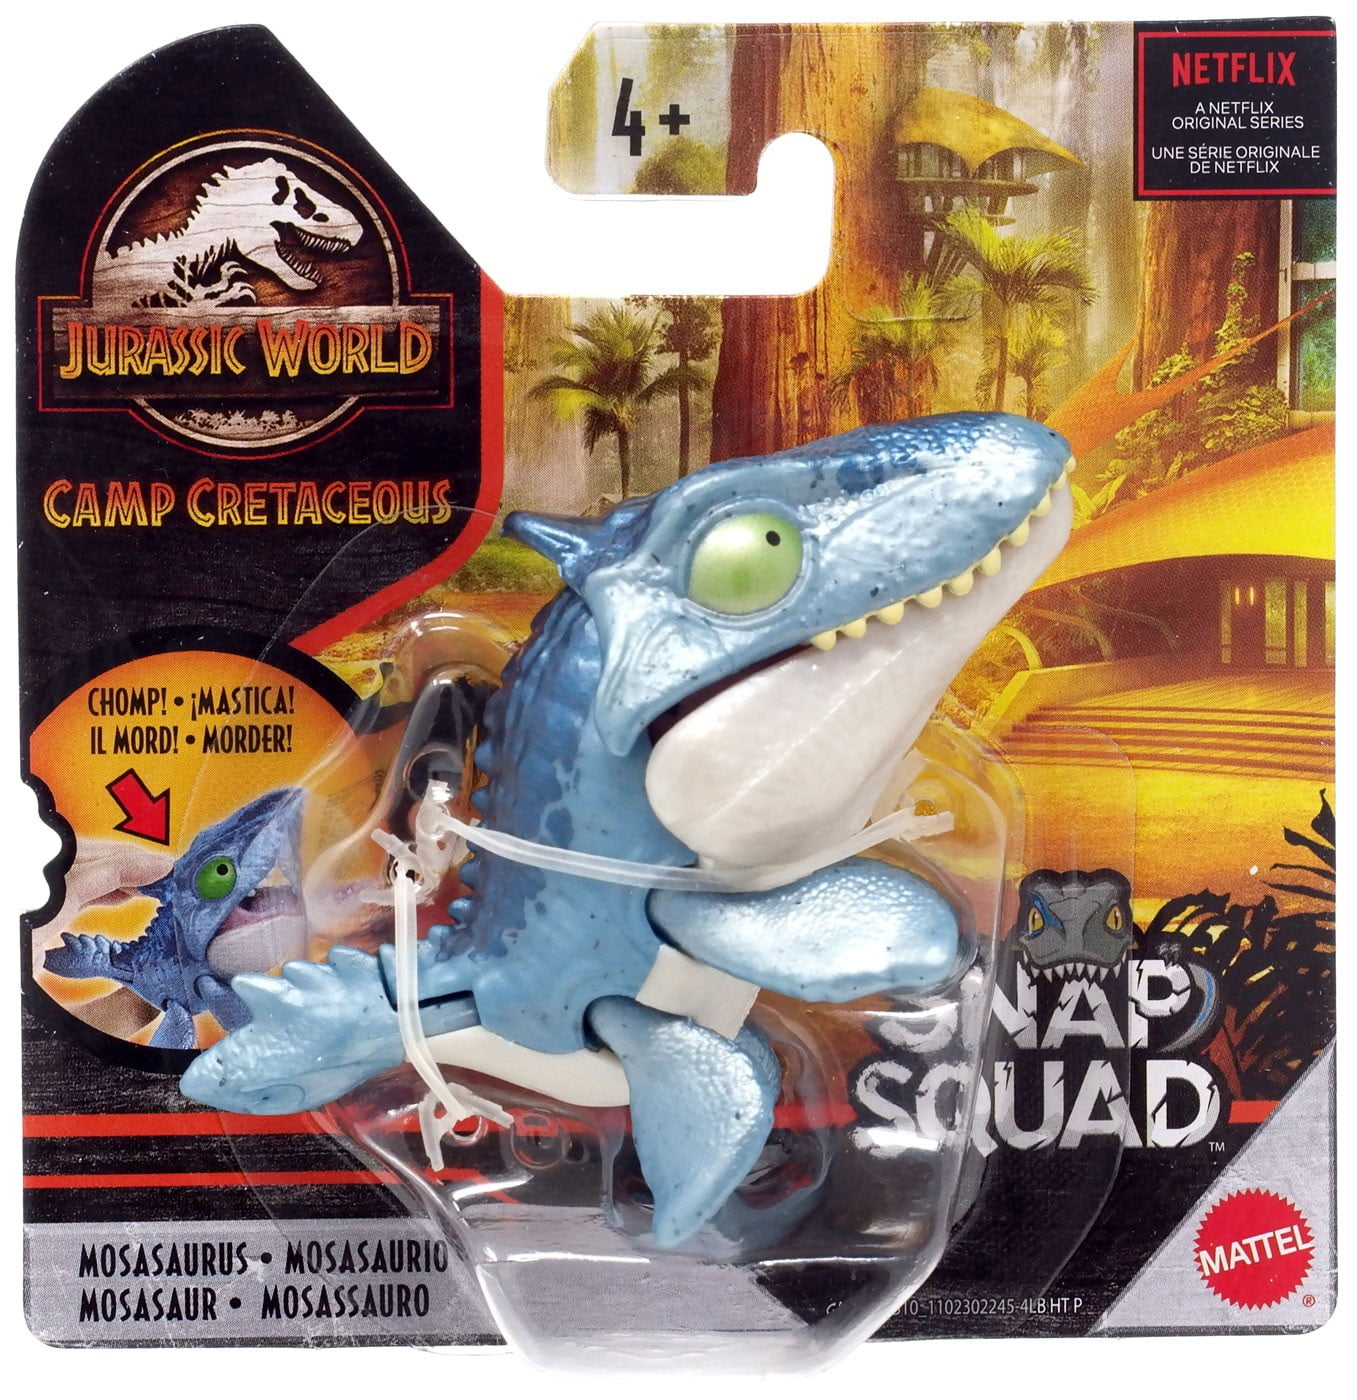 Mini Original Jurassic World Snap Squad Set of 4 Mosasaurus T Rex Dinosaur Toys 